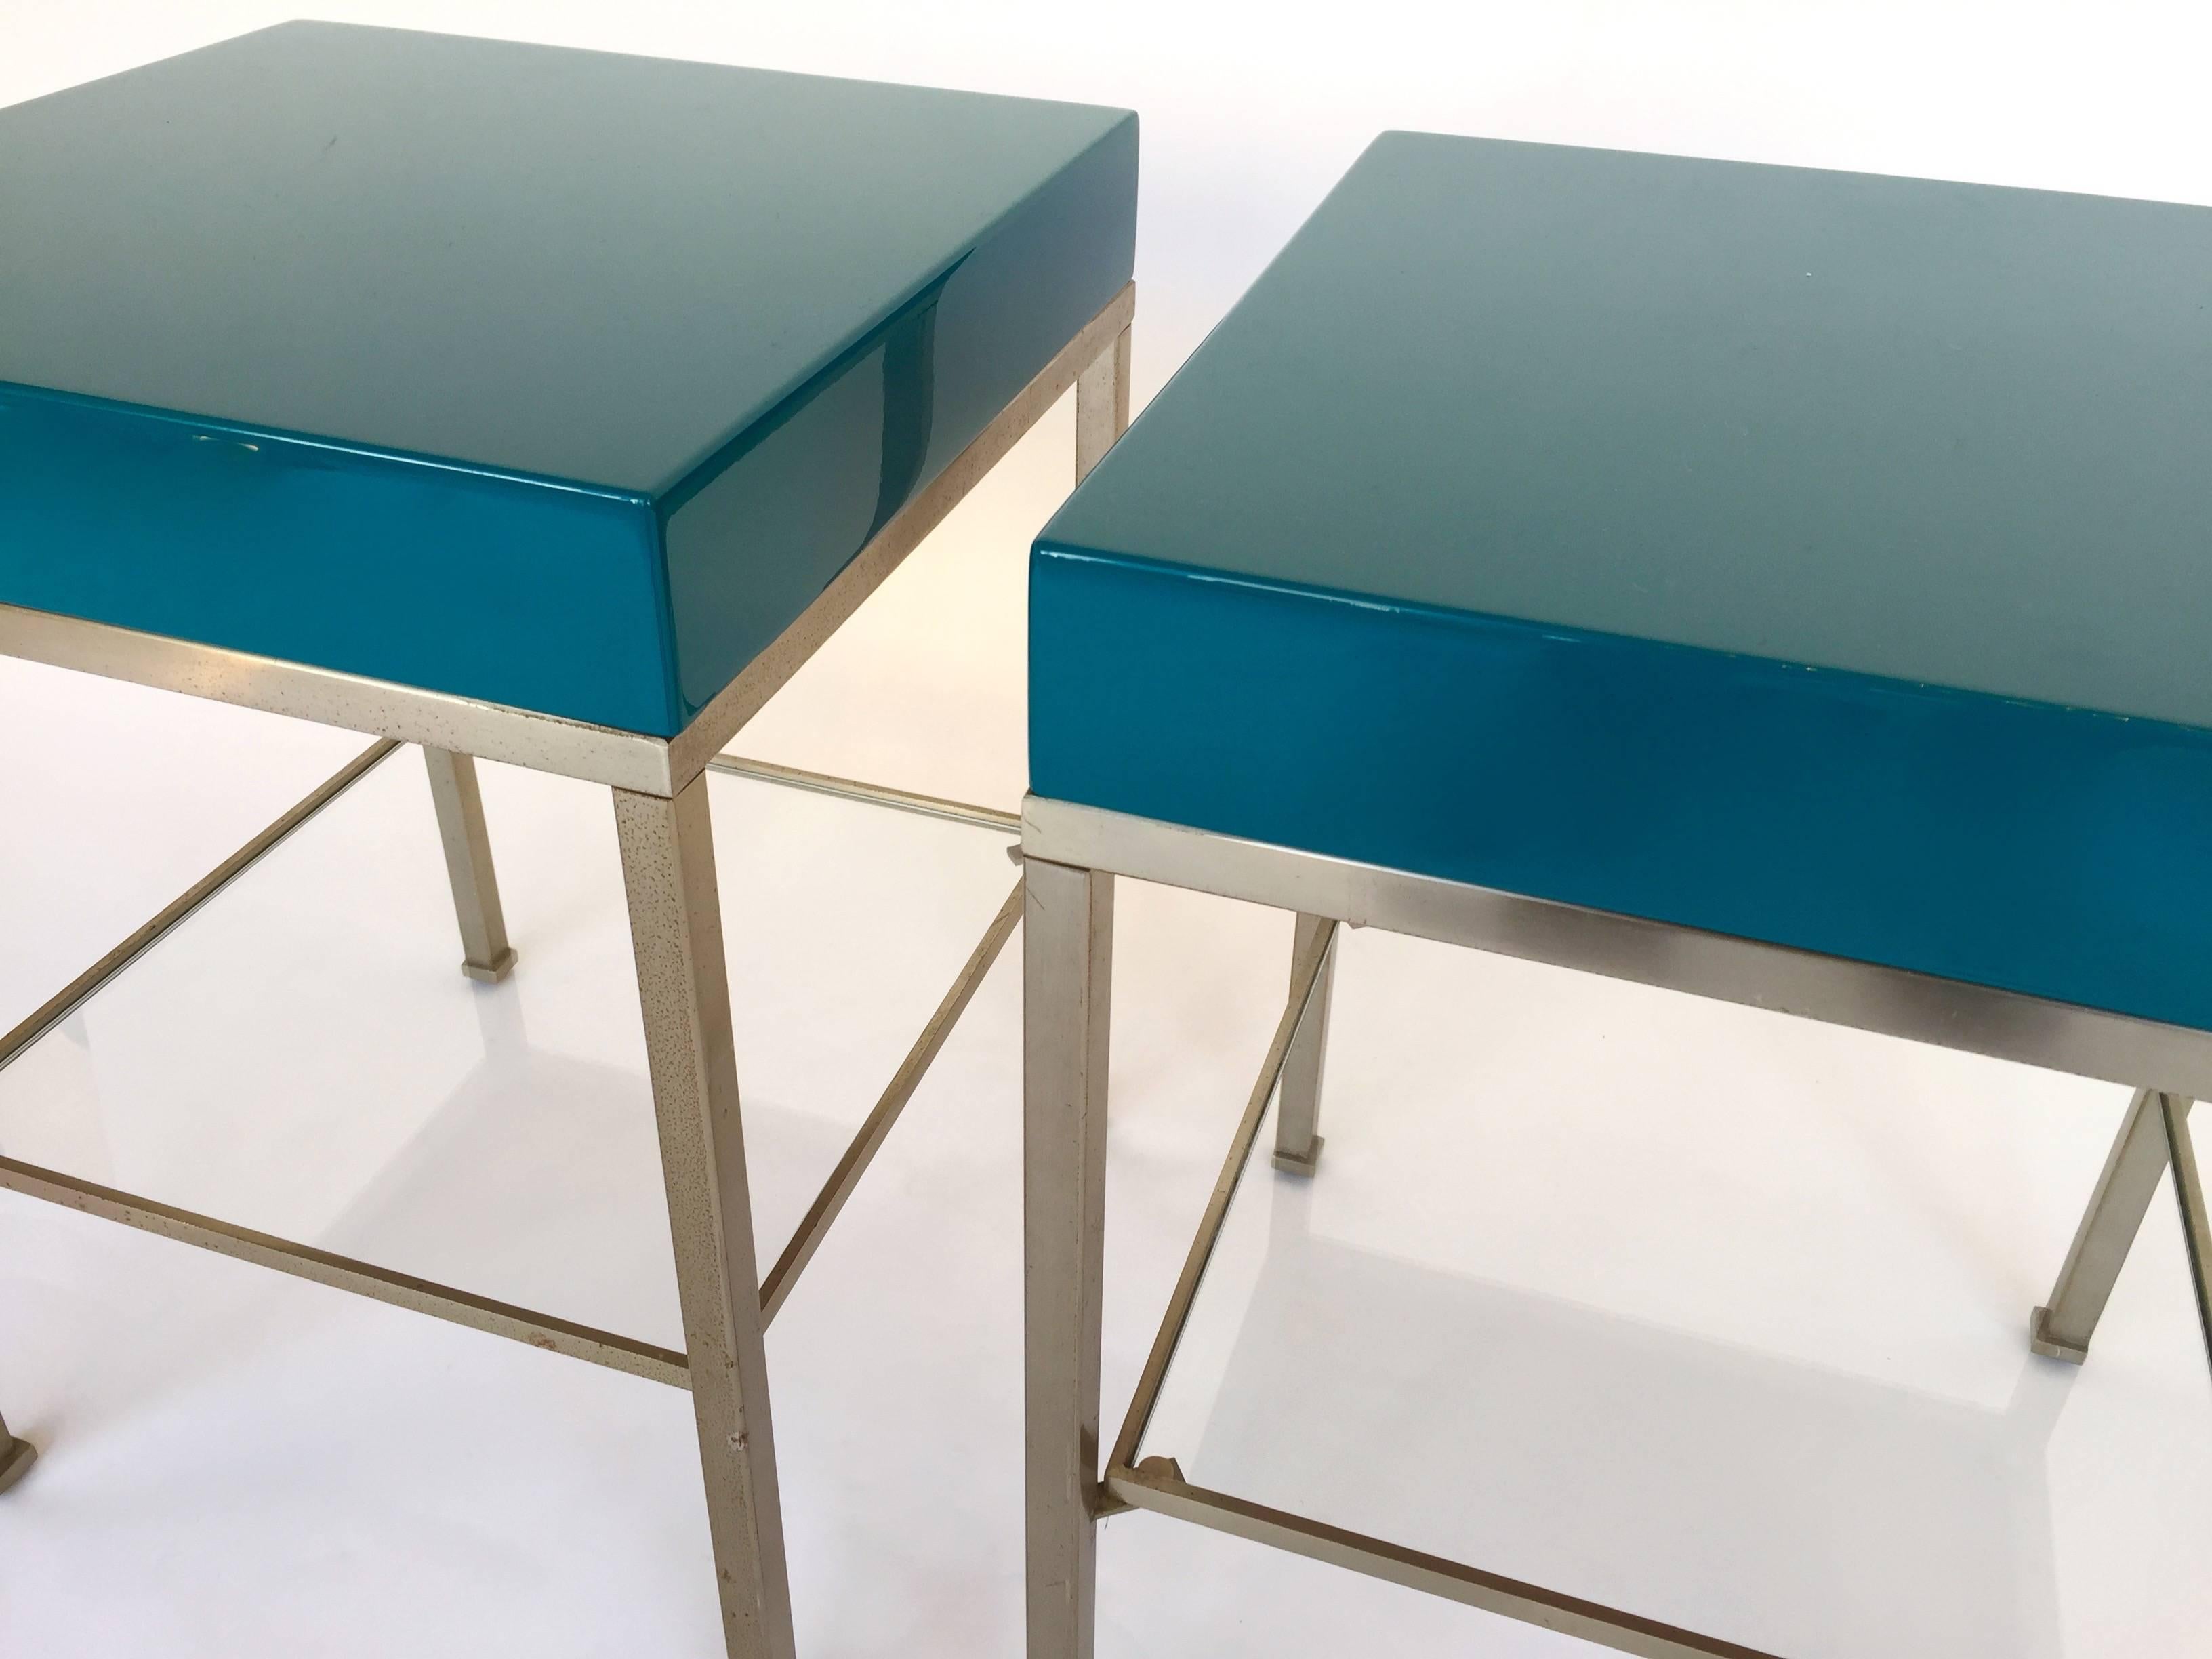 Italian Pair of Lacquered Side Tables by Guy Lefevre for Maison Jansen, 1970s, France